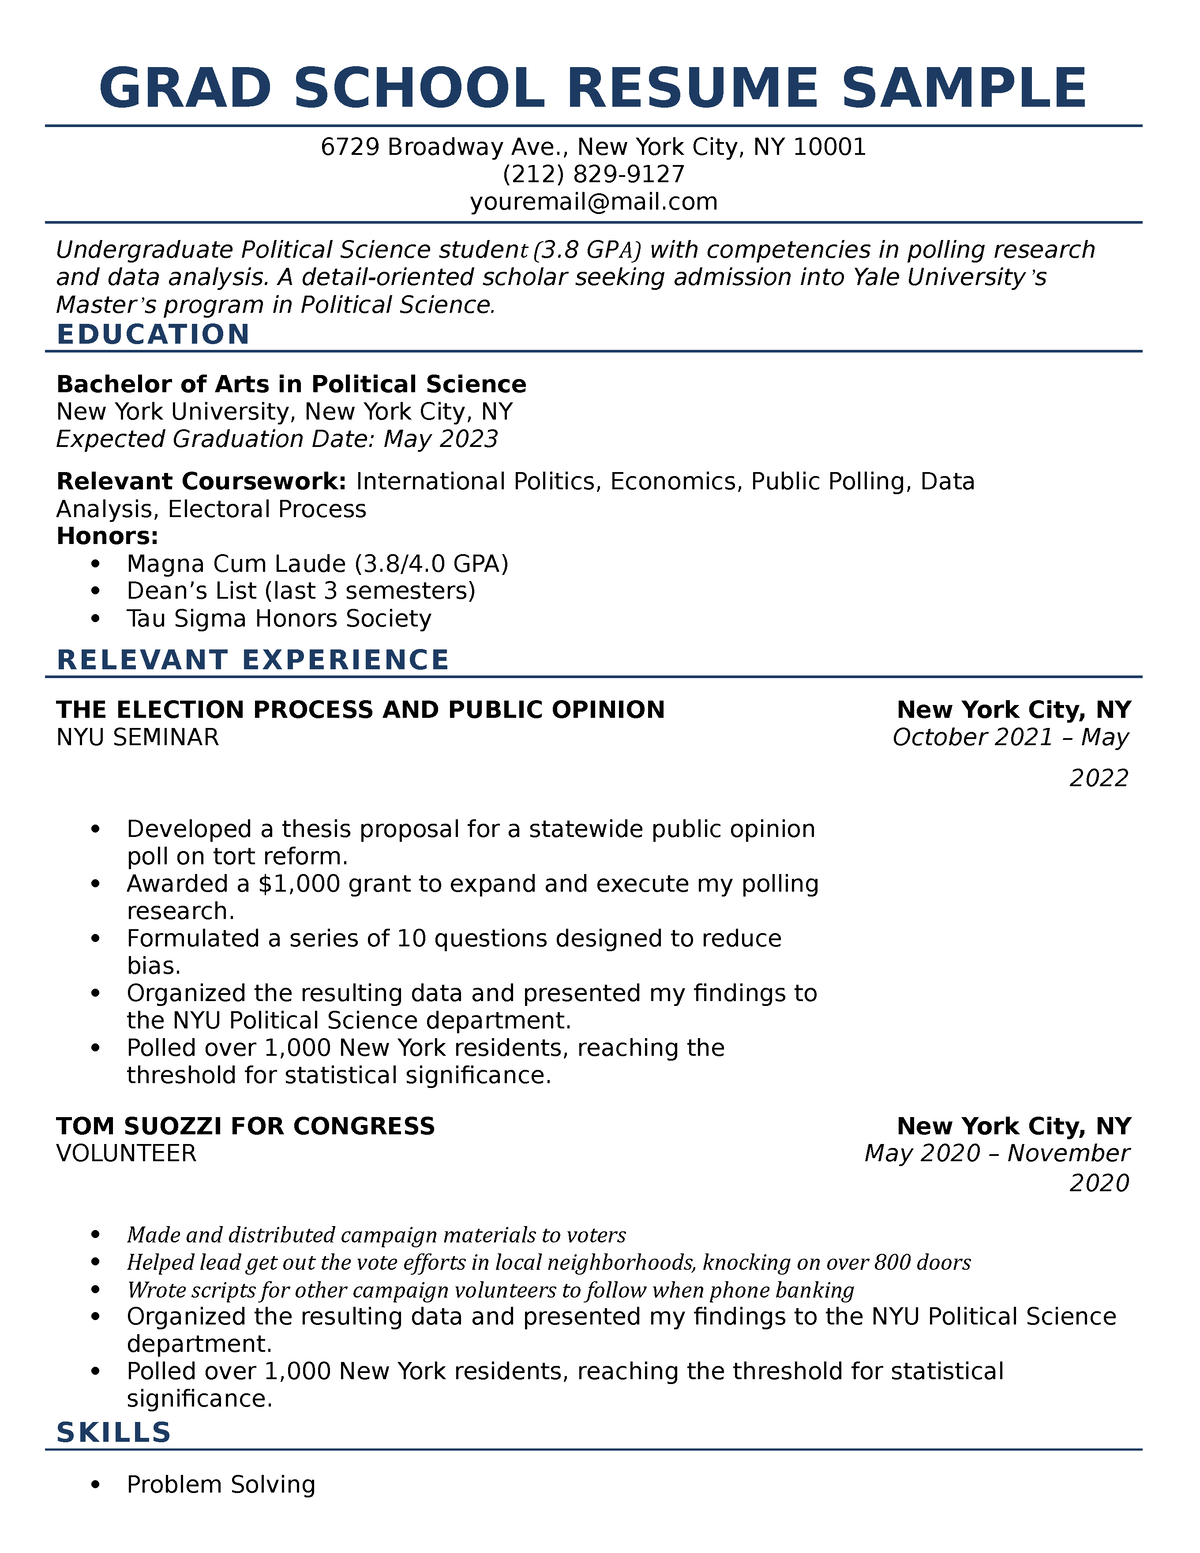 Grad school resume sample free download - GRAD SCHOOL RESUME SAMPLE ...